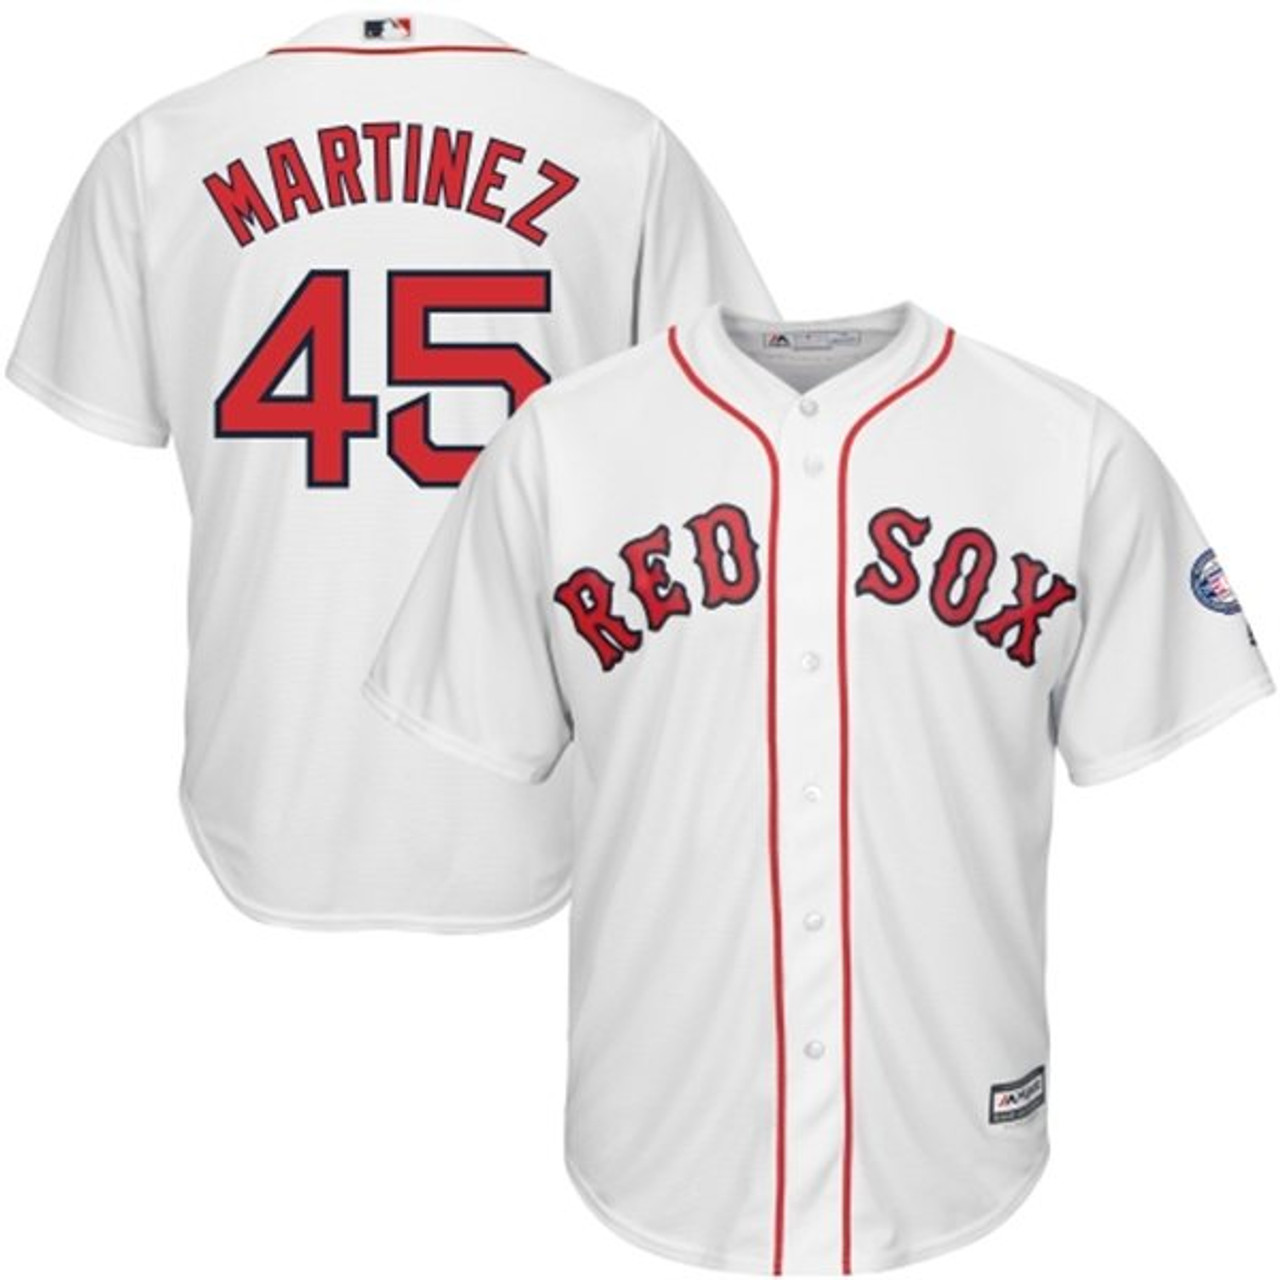 Martinez Men's Baseball Jersey # 28, Red Sox Red Alternate Replica